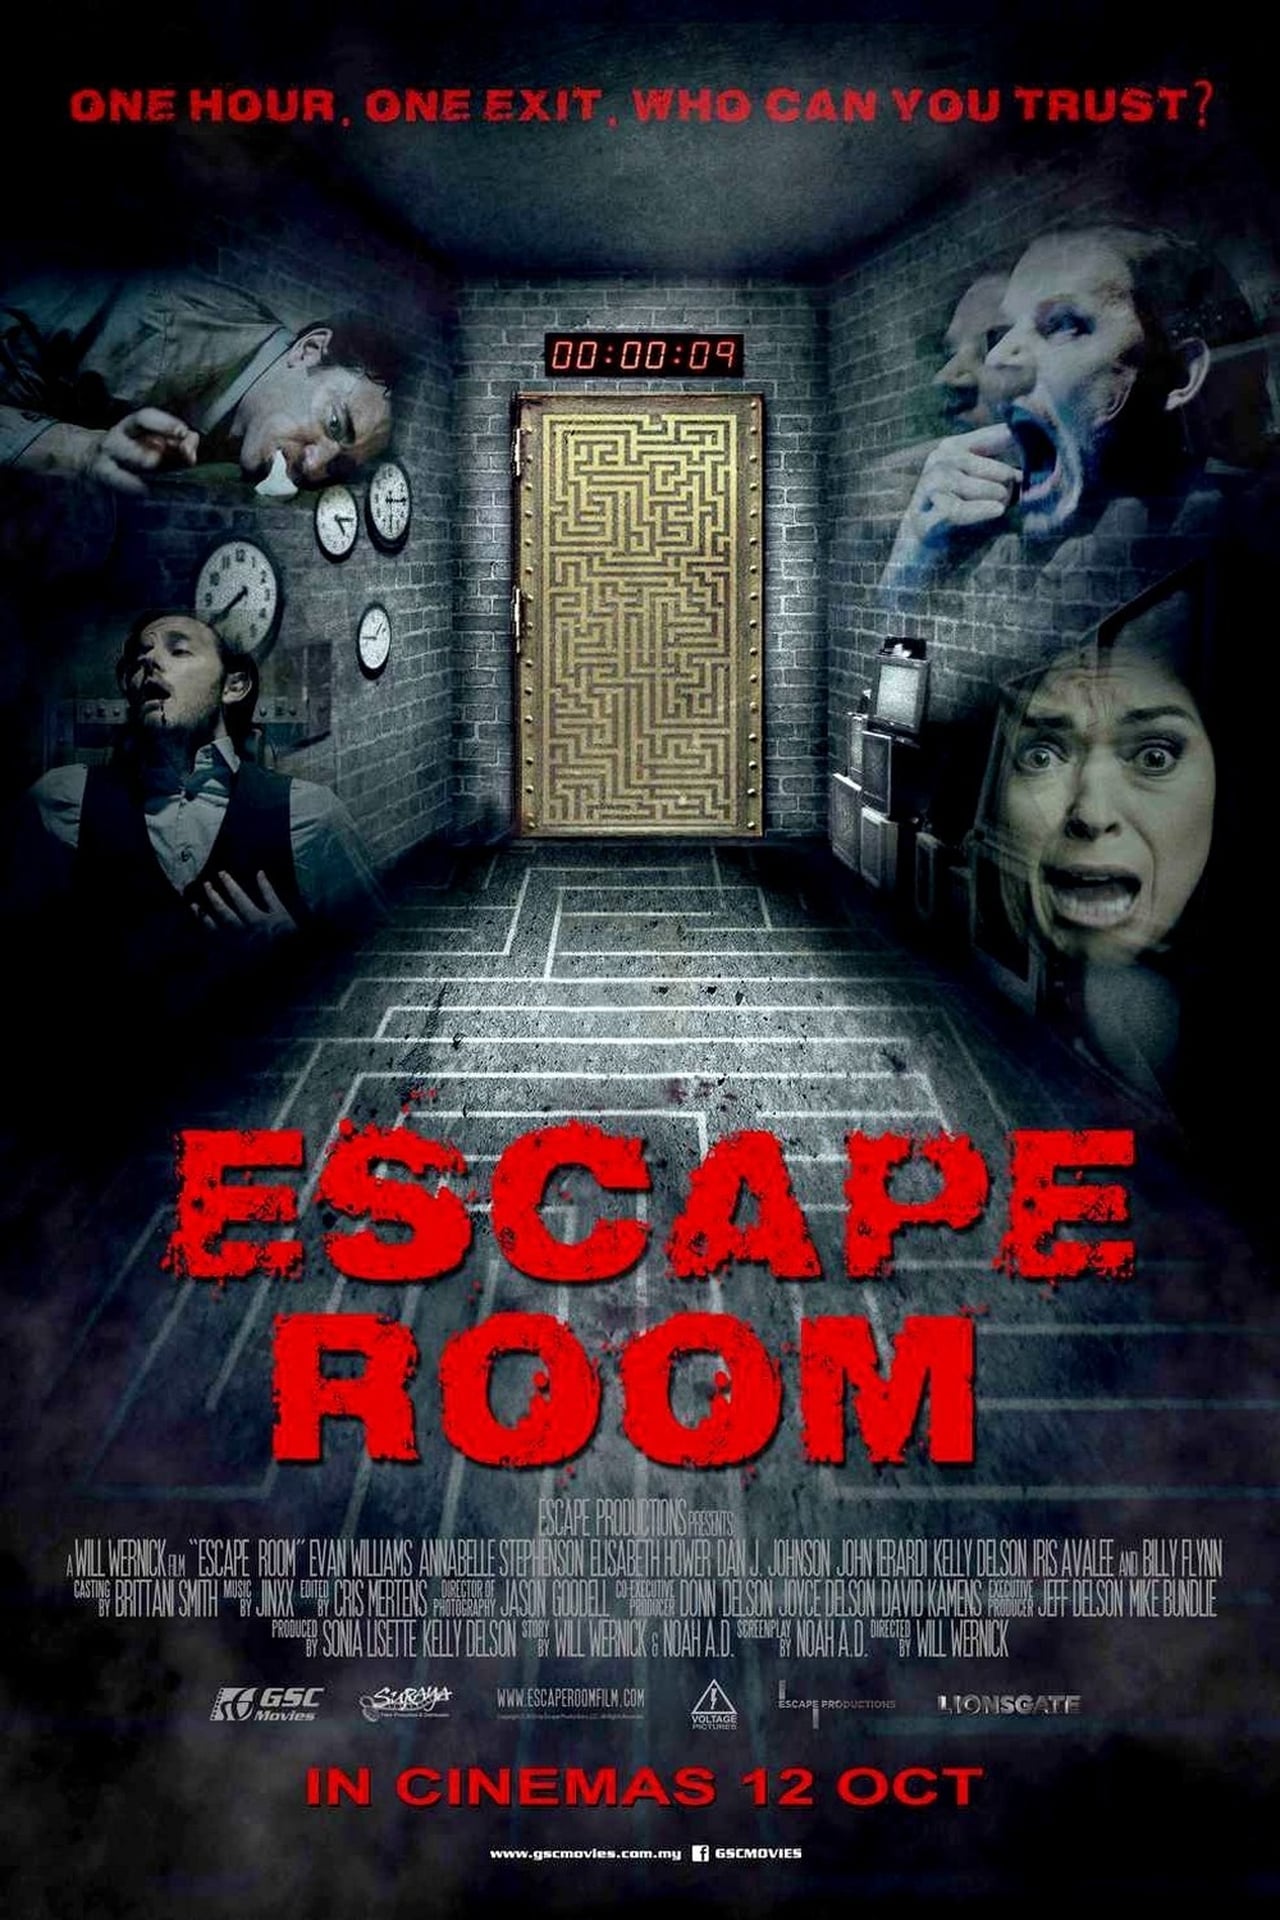 The room poster. Клаустрофобы Escape Room 2019.